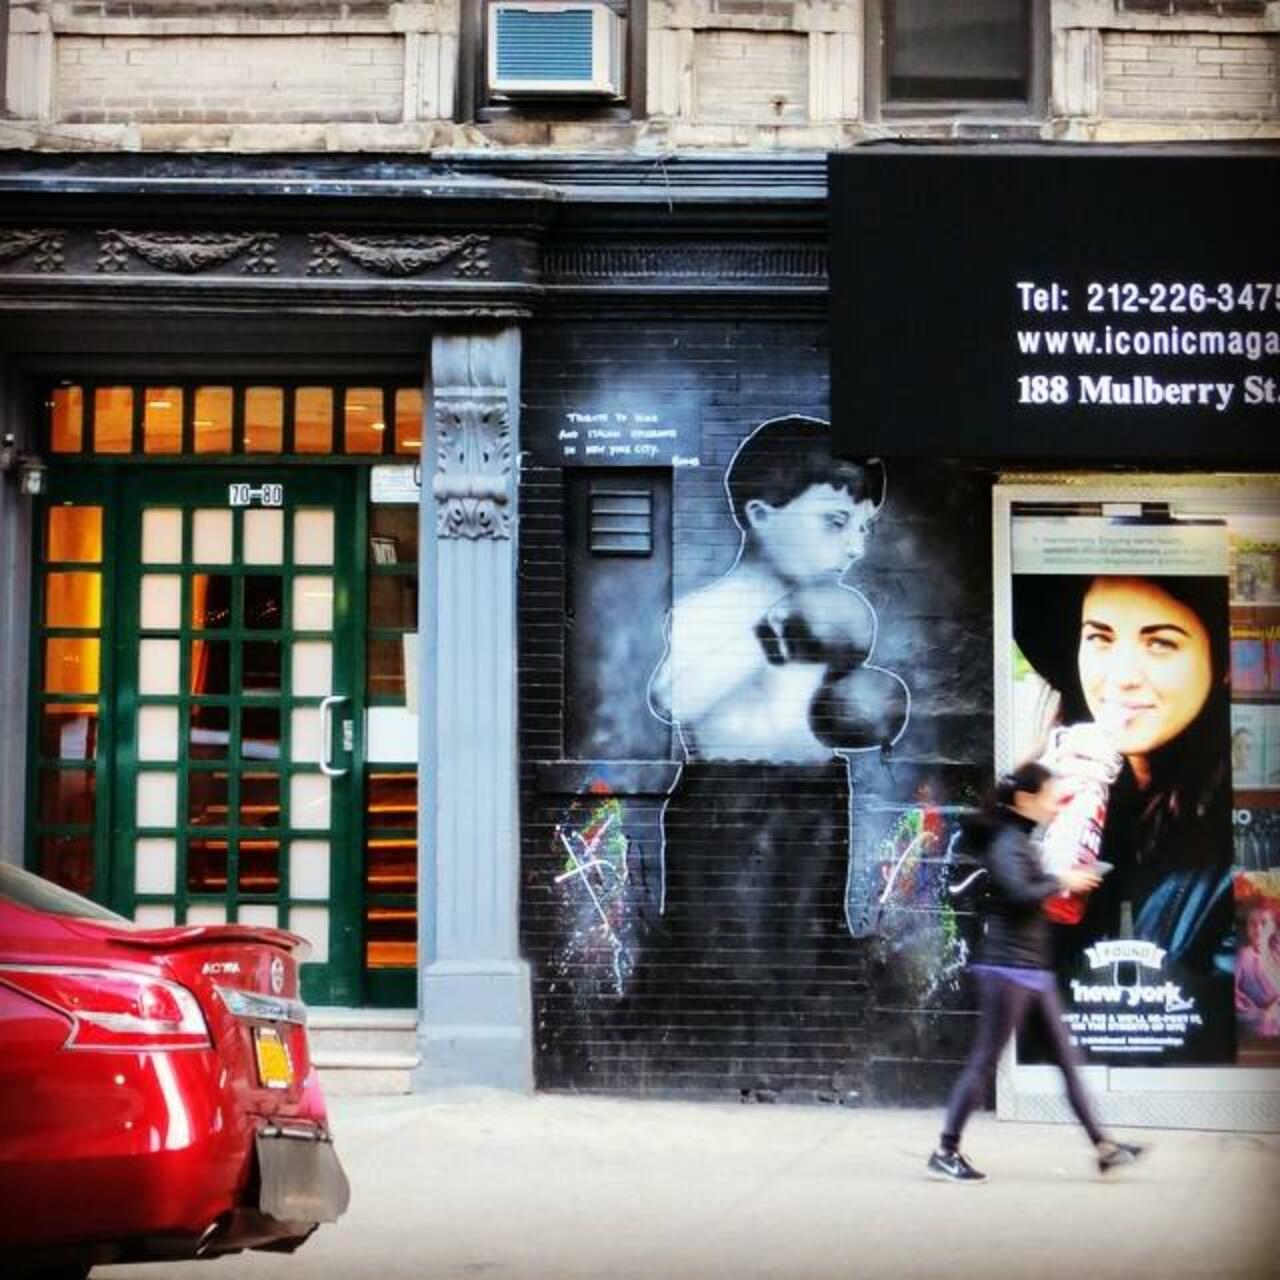 Solus Tribute to Irish and Italian Immigrants in New York City #streetart #graffiti #mural… http://bit.ly/1EXW5Ia http://t.co/RoUwEtKESY